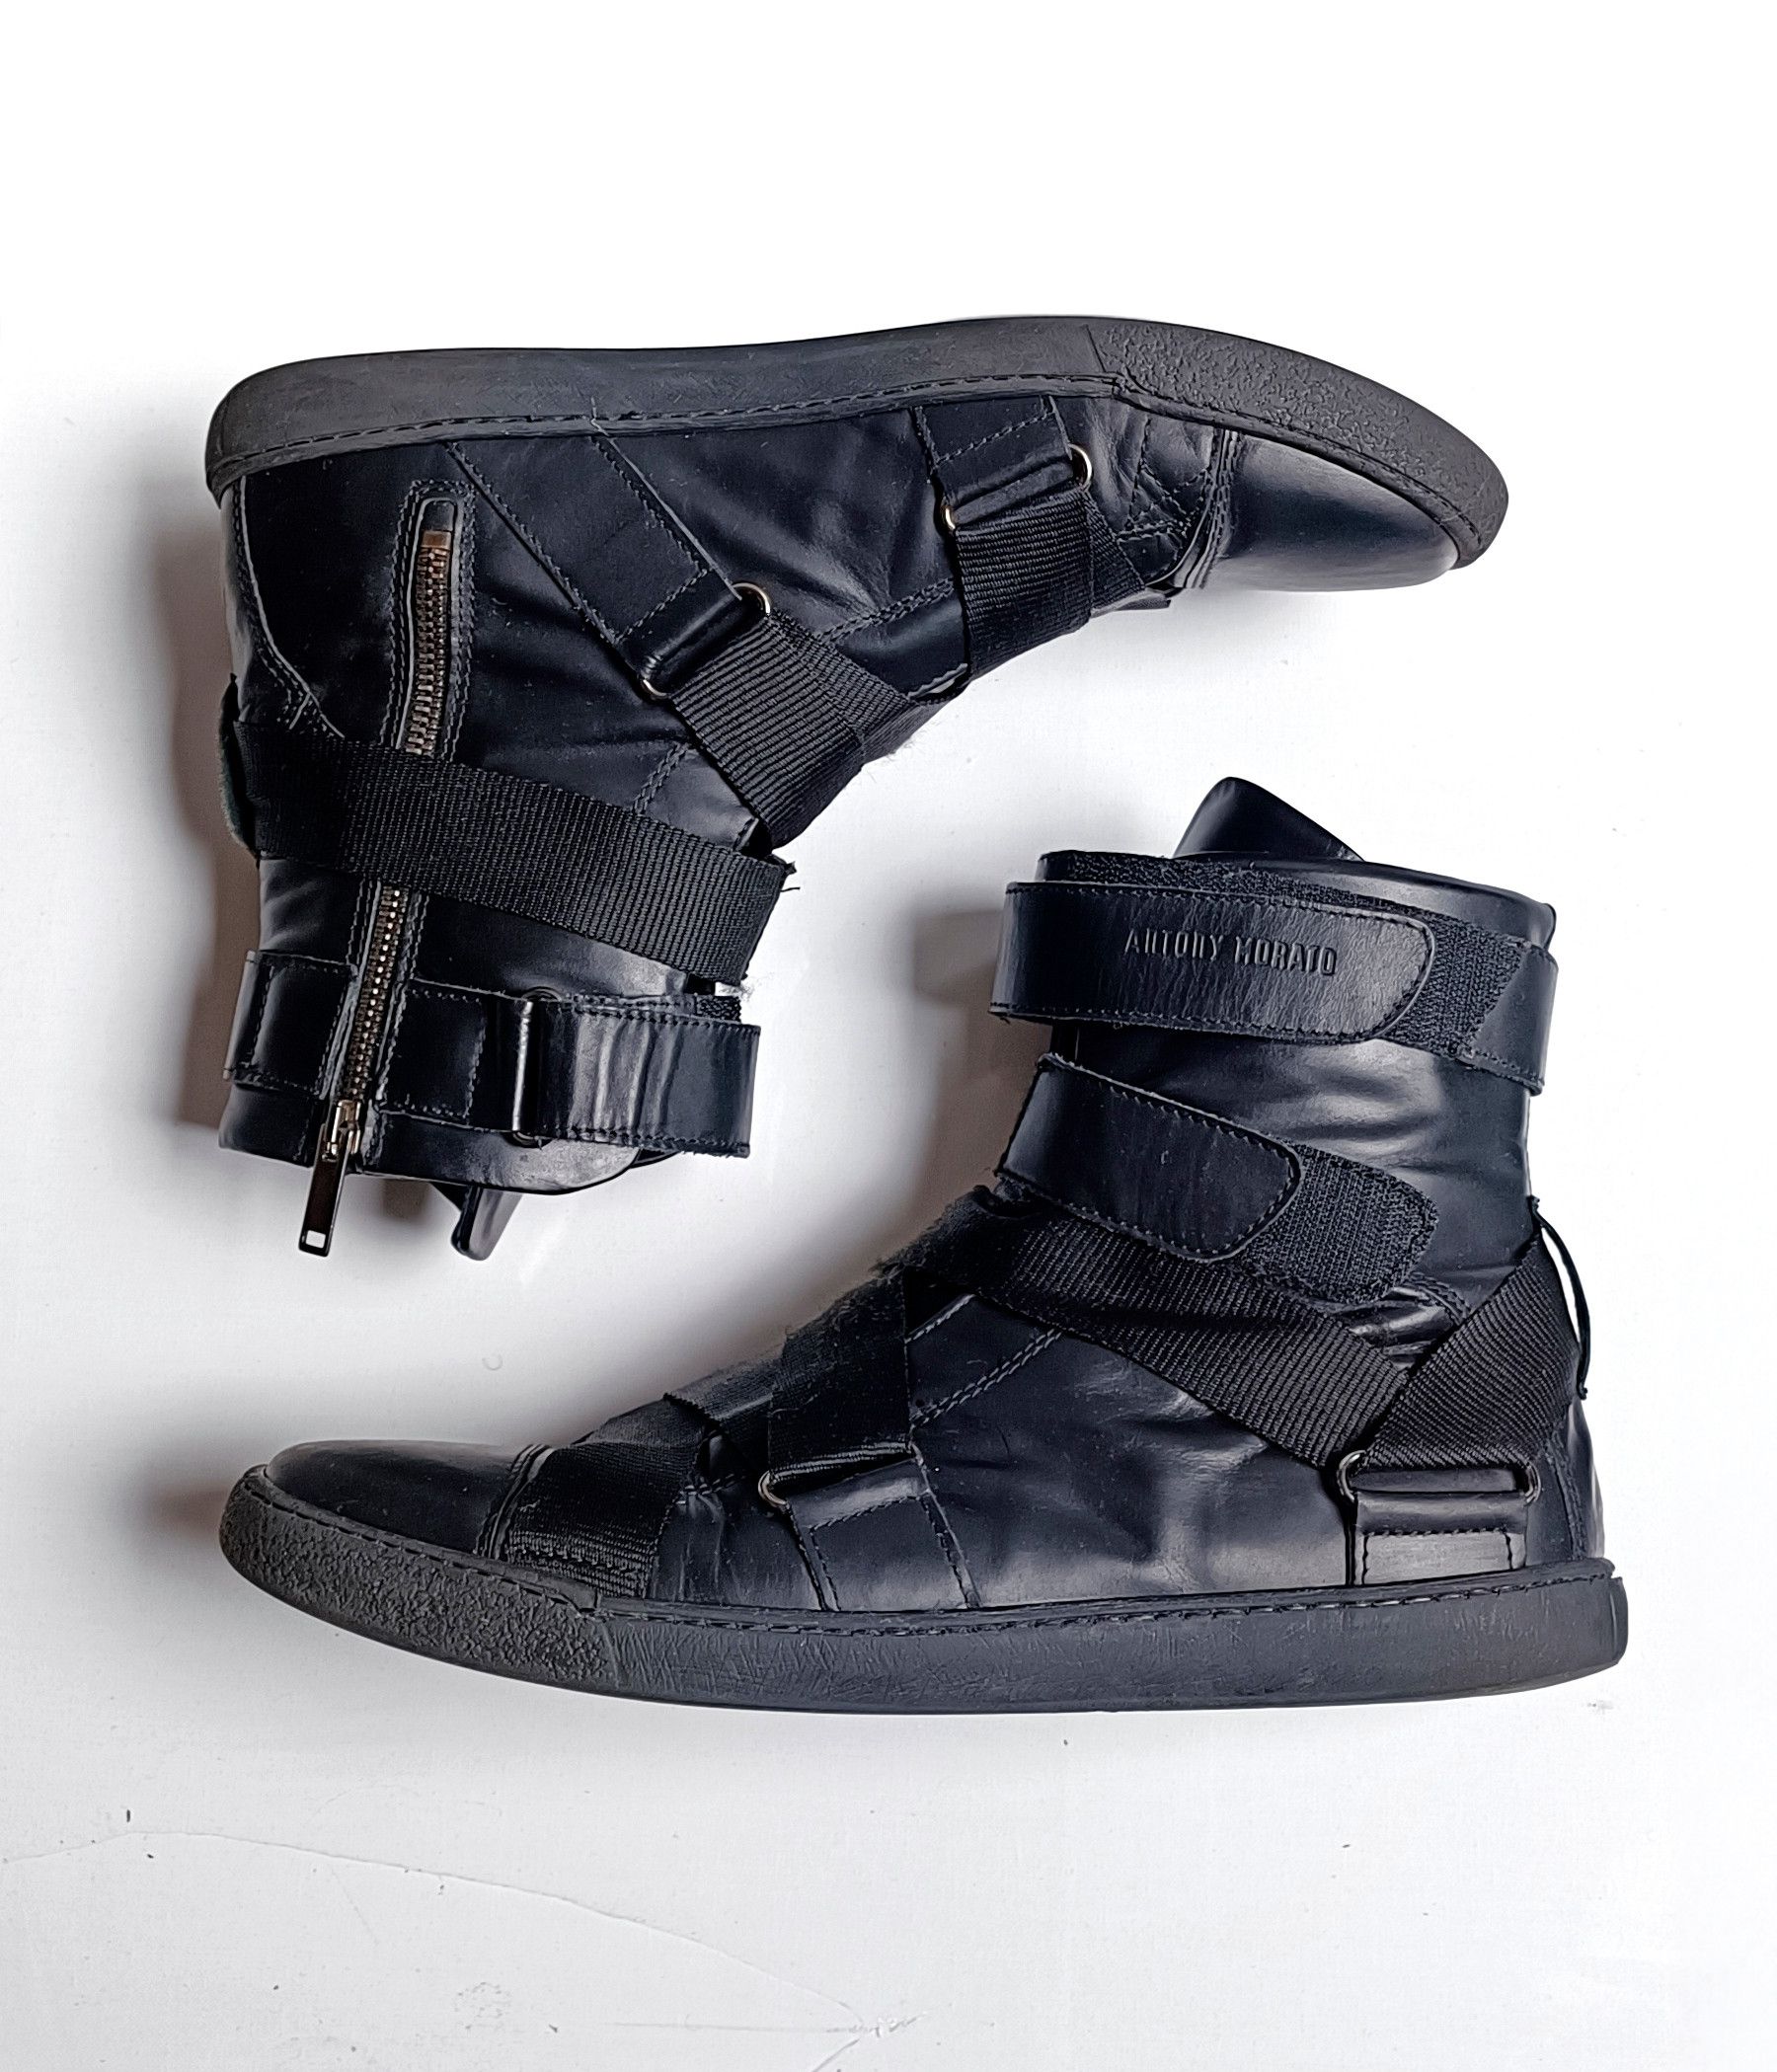 Antony Morato Men's Leather Biker Strap Boots DS - 1